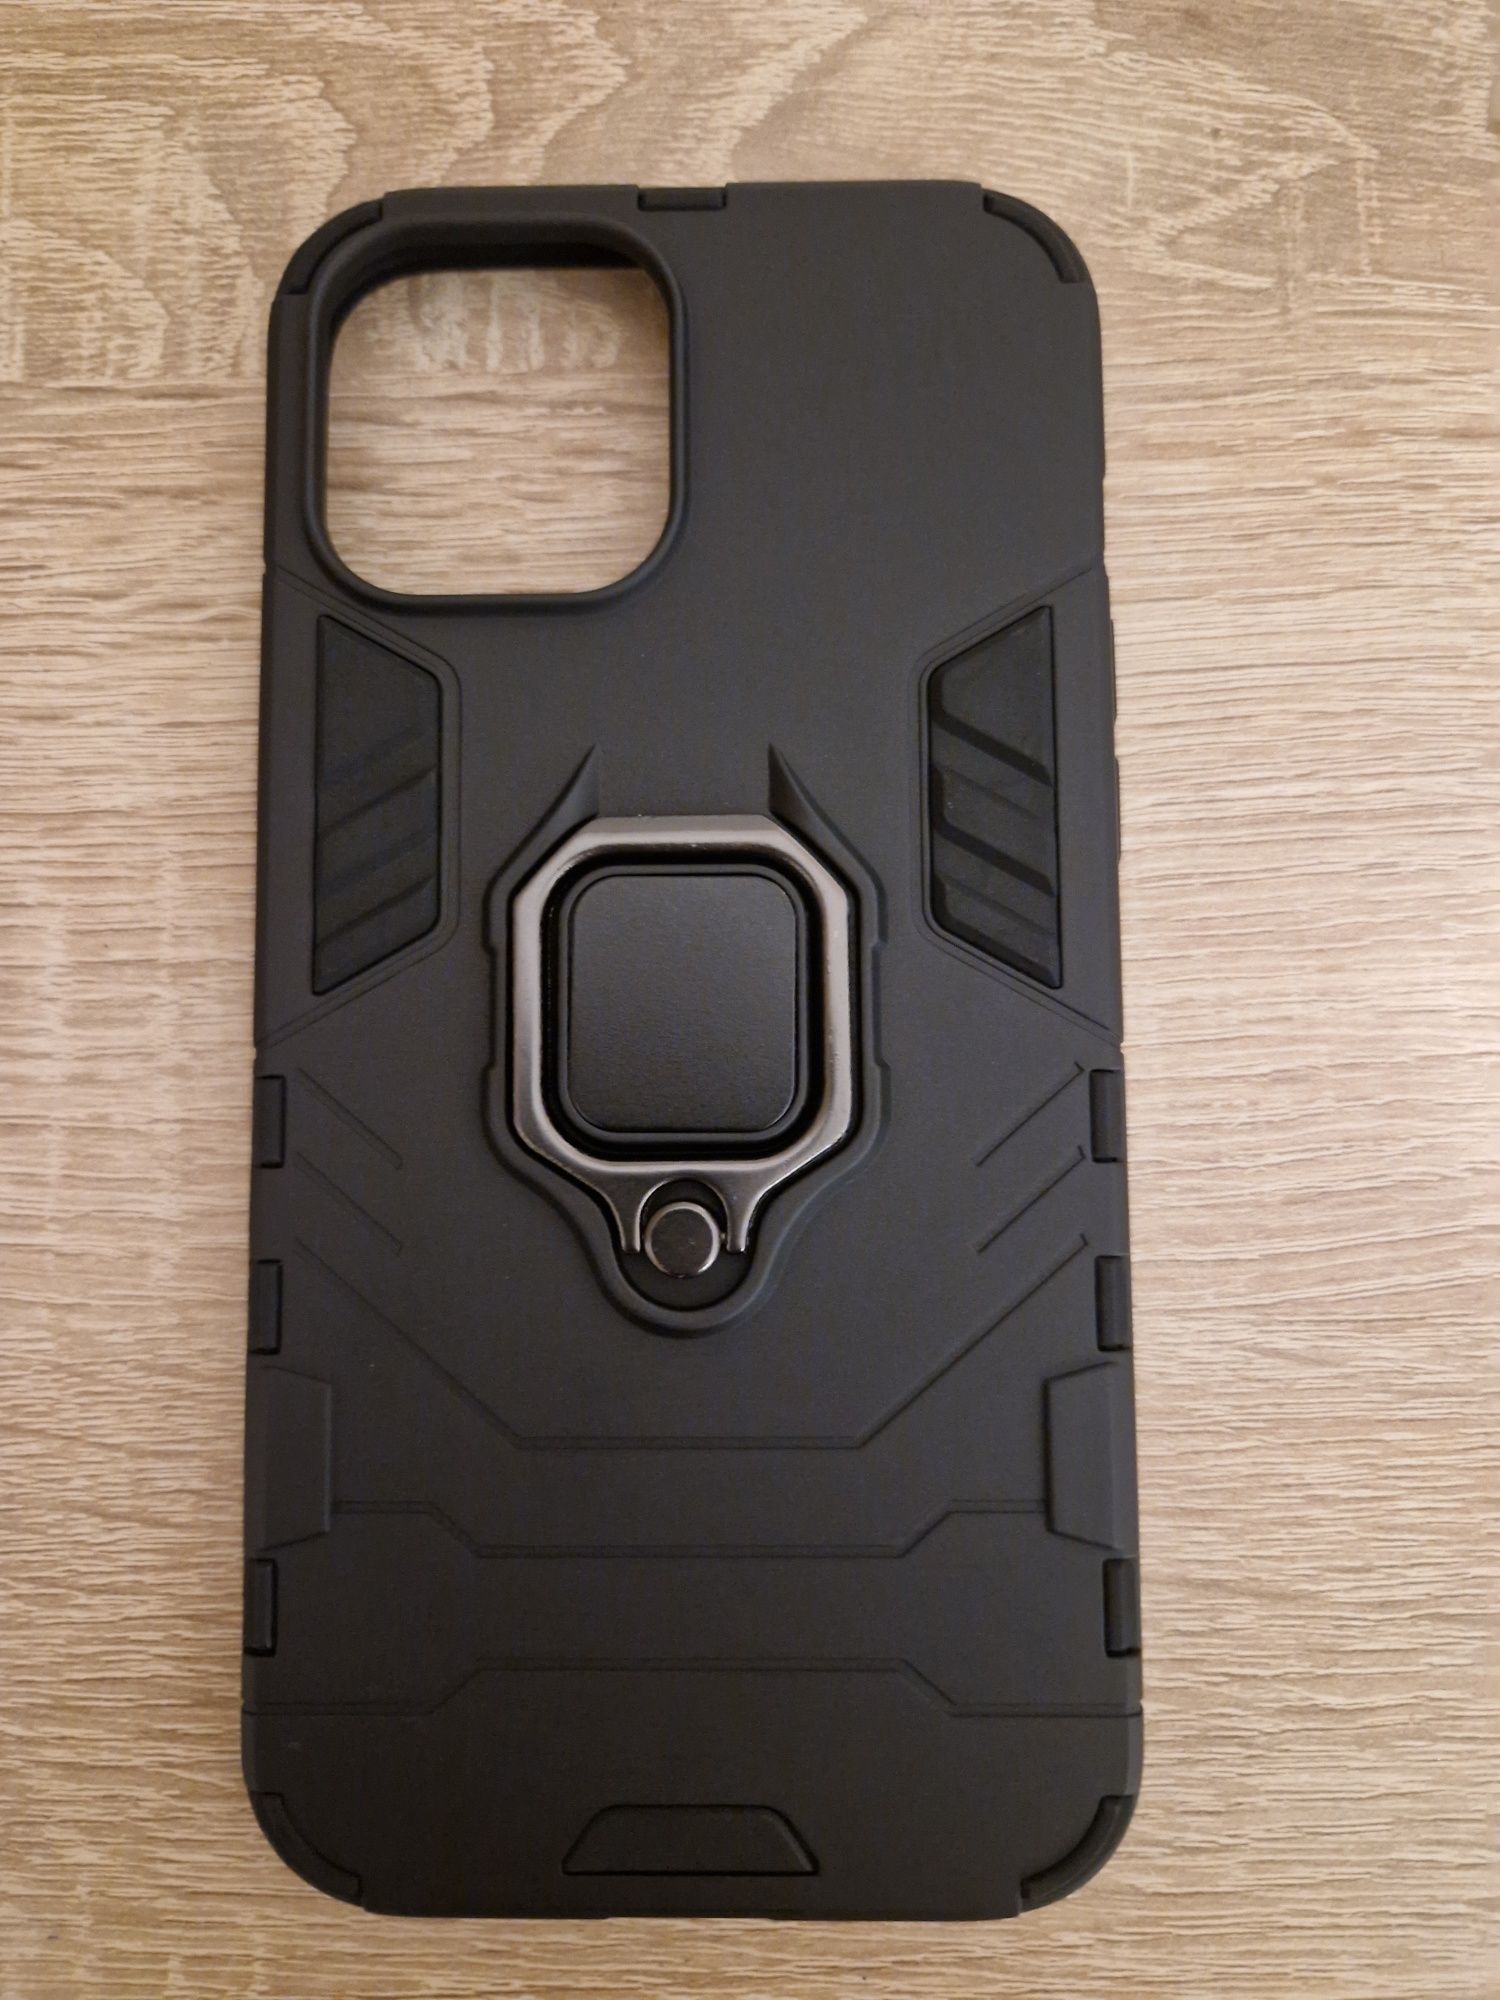 Etui Ring Armor Case do Iphone 12 Pro Max Czarny